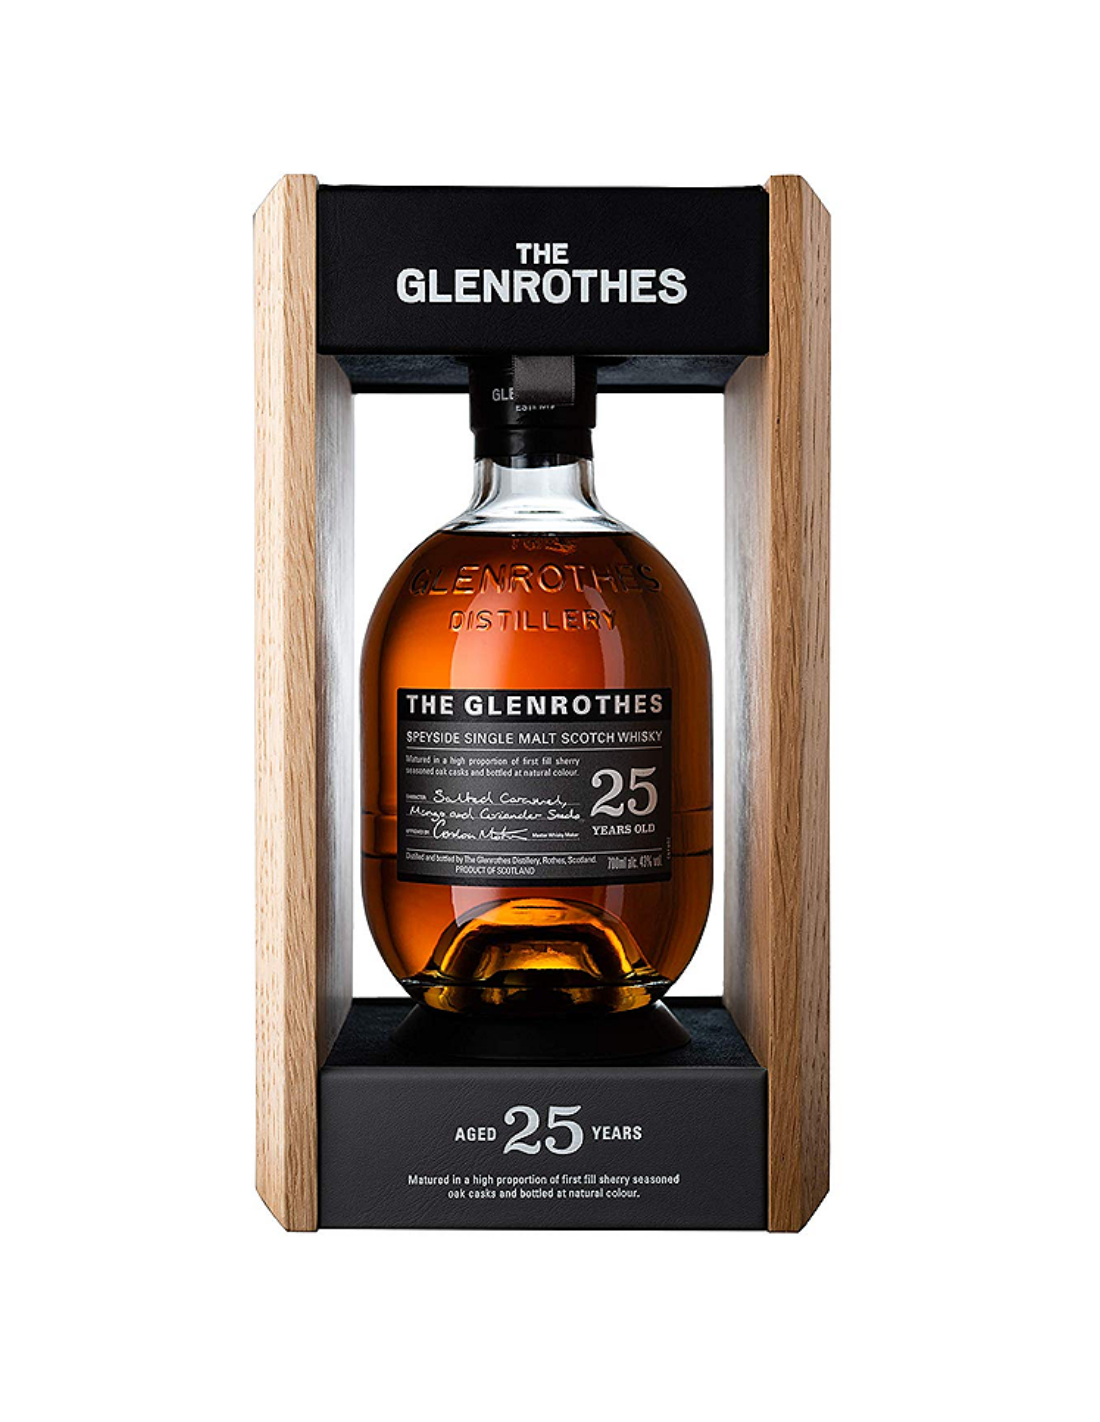 Whisky The Glenrothes 25 Years Single Malt Scotch, 0.7L, 43% alc., Marea Britanie alcooldiscount.ro